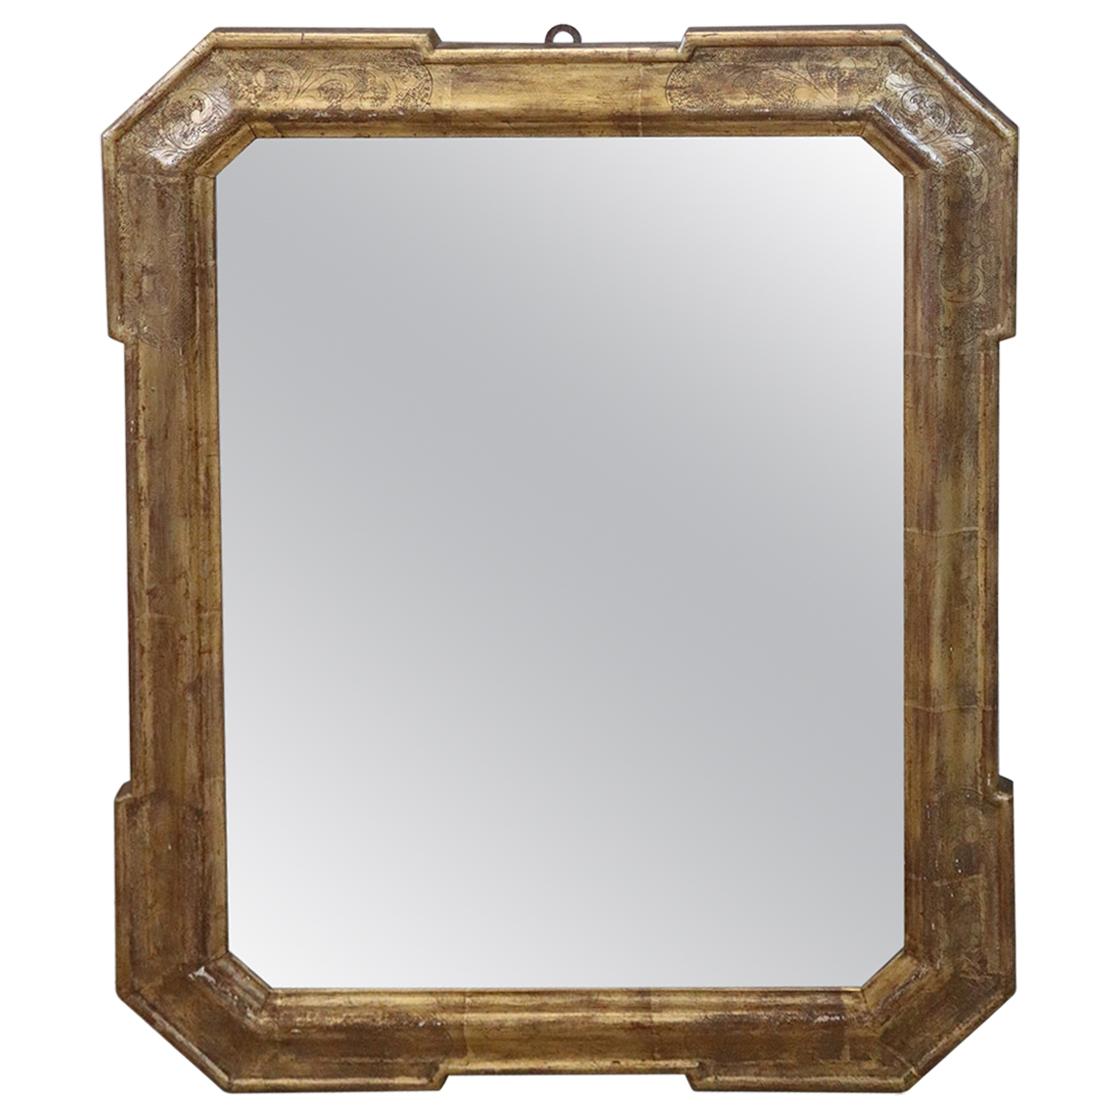 19th Century Italian Gilded Wood Wall Mirror